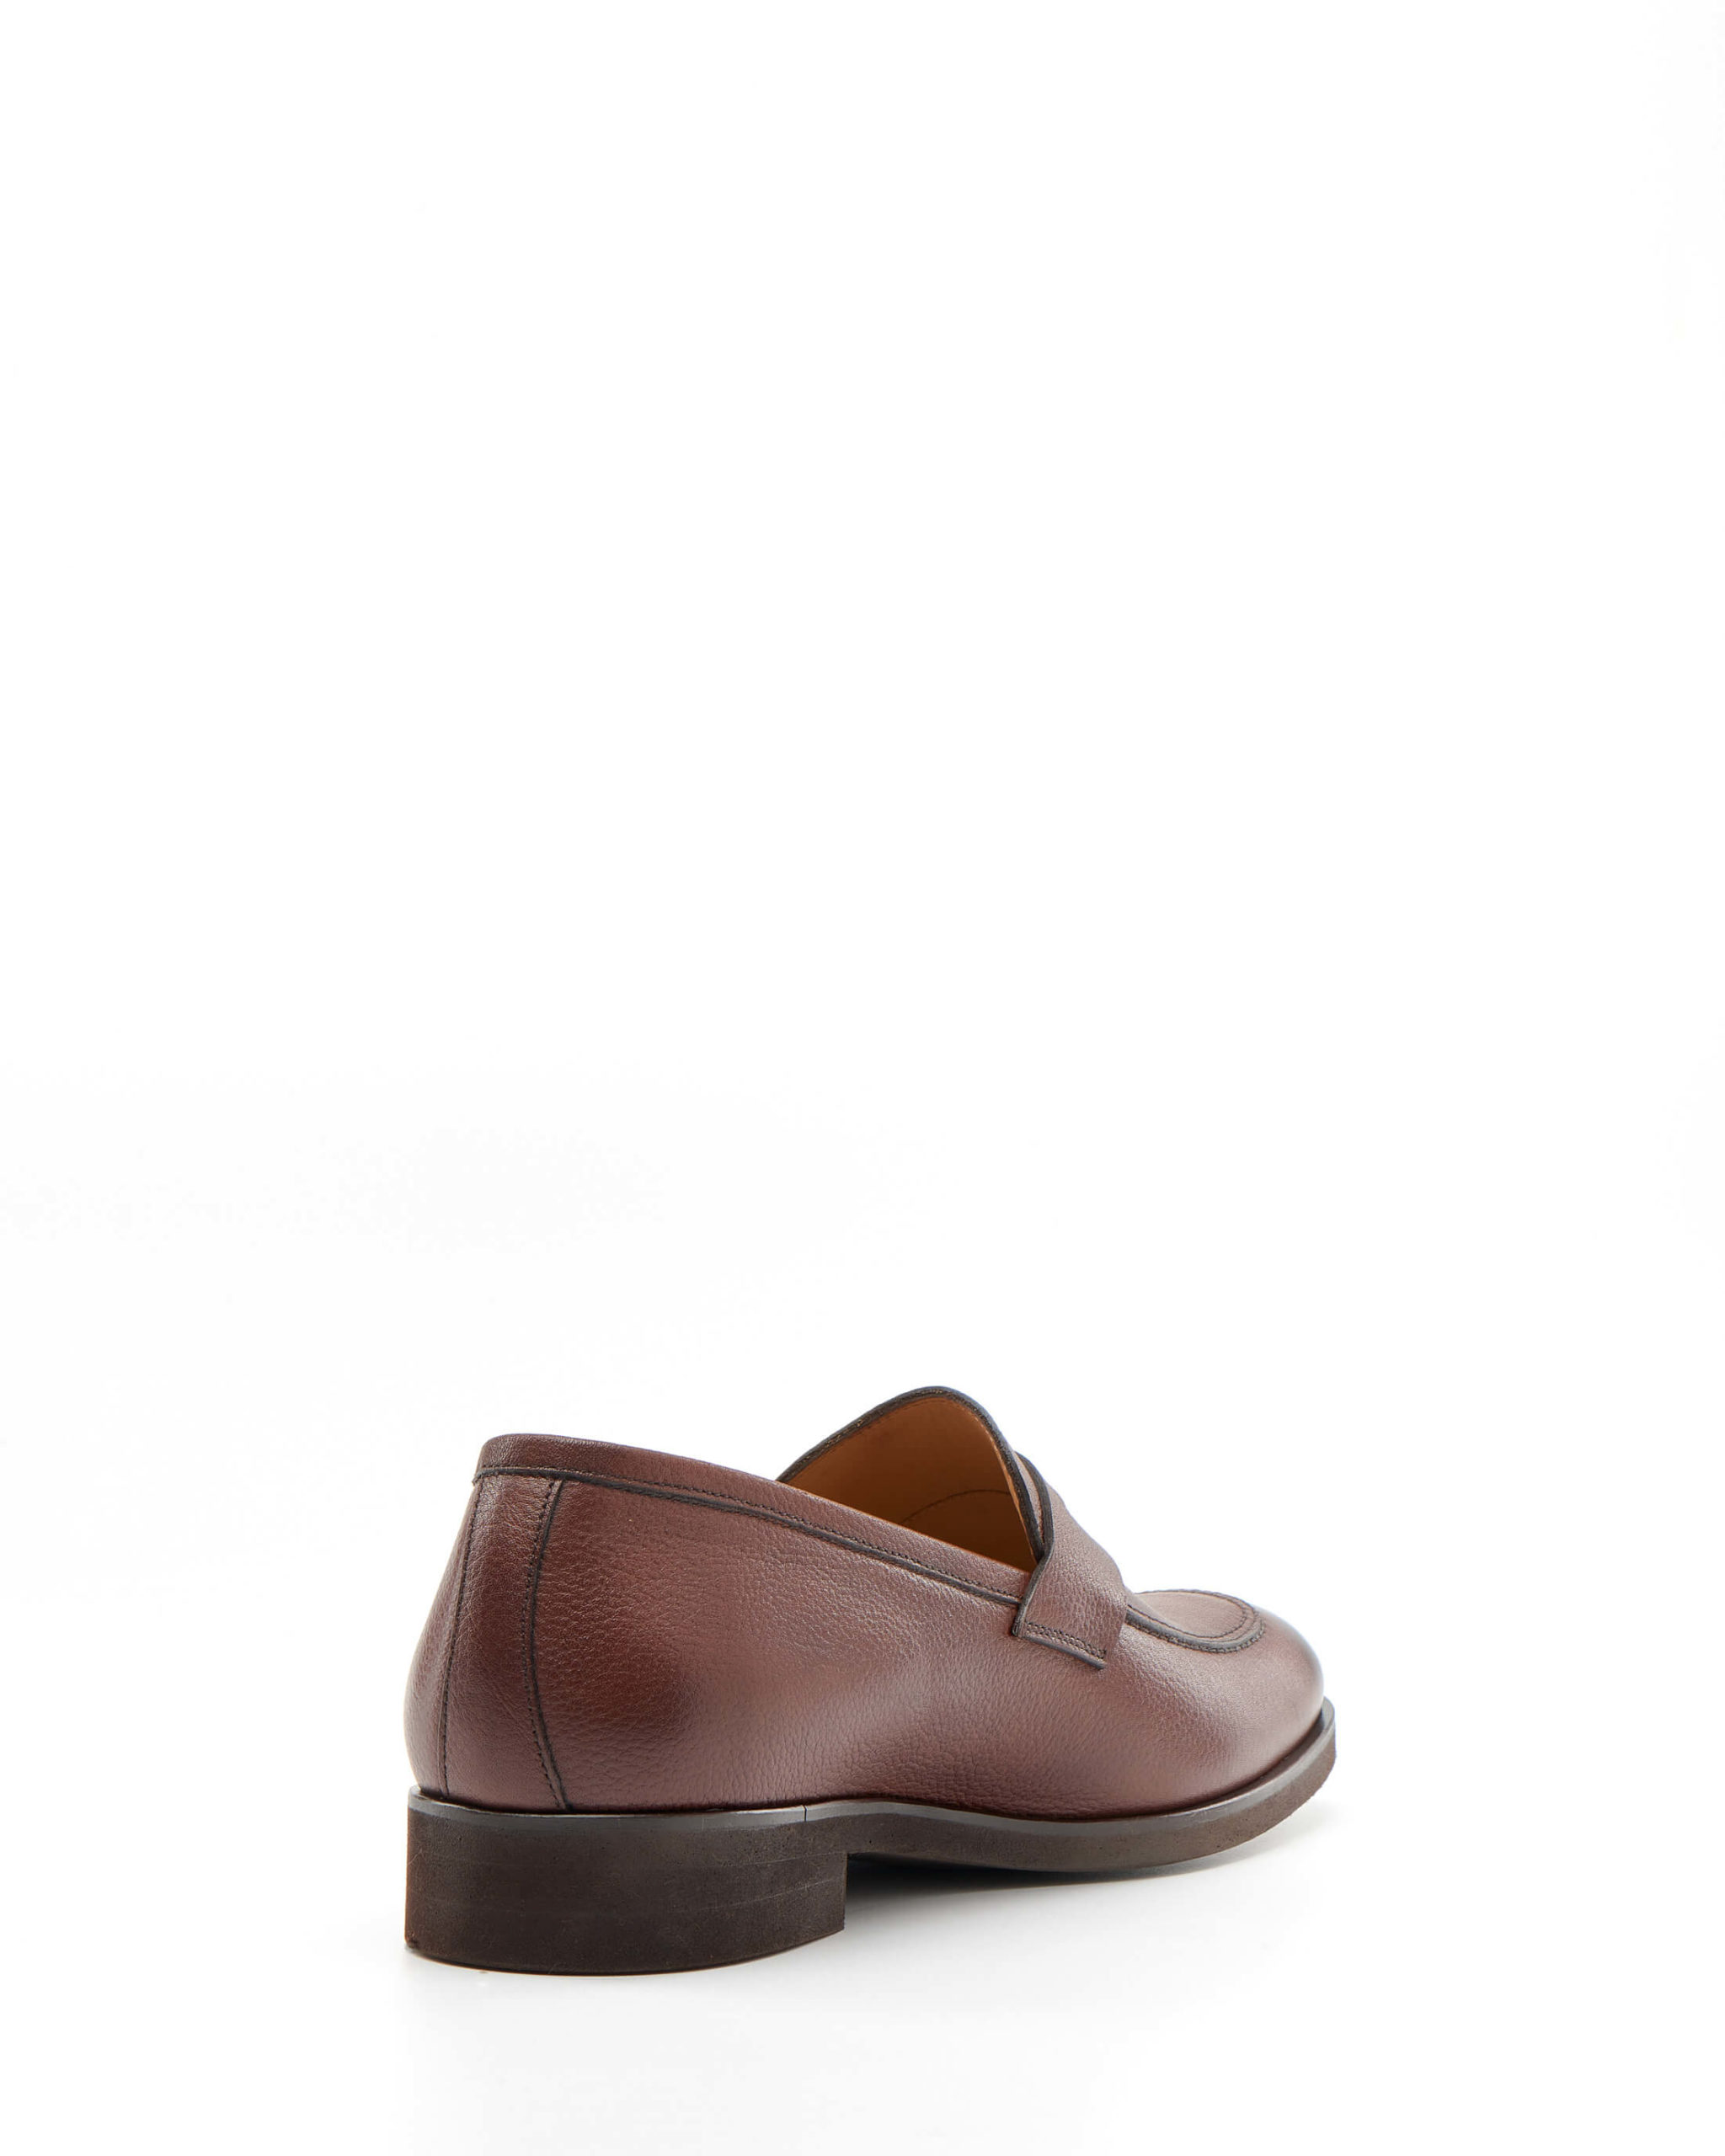 Luis Onofre Portuguese Shoes FW22 – HS0650_10 – Pocillo Brown-3